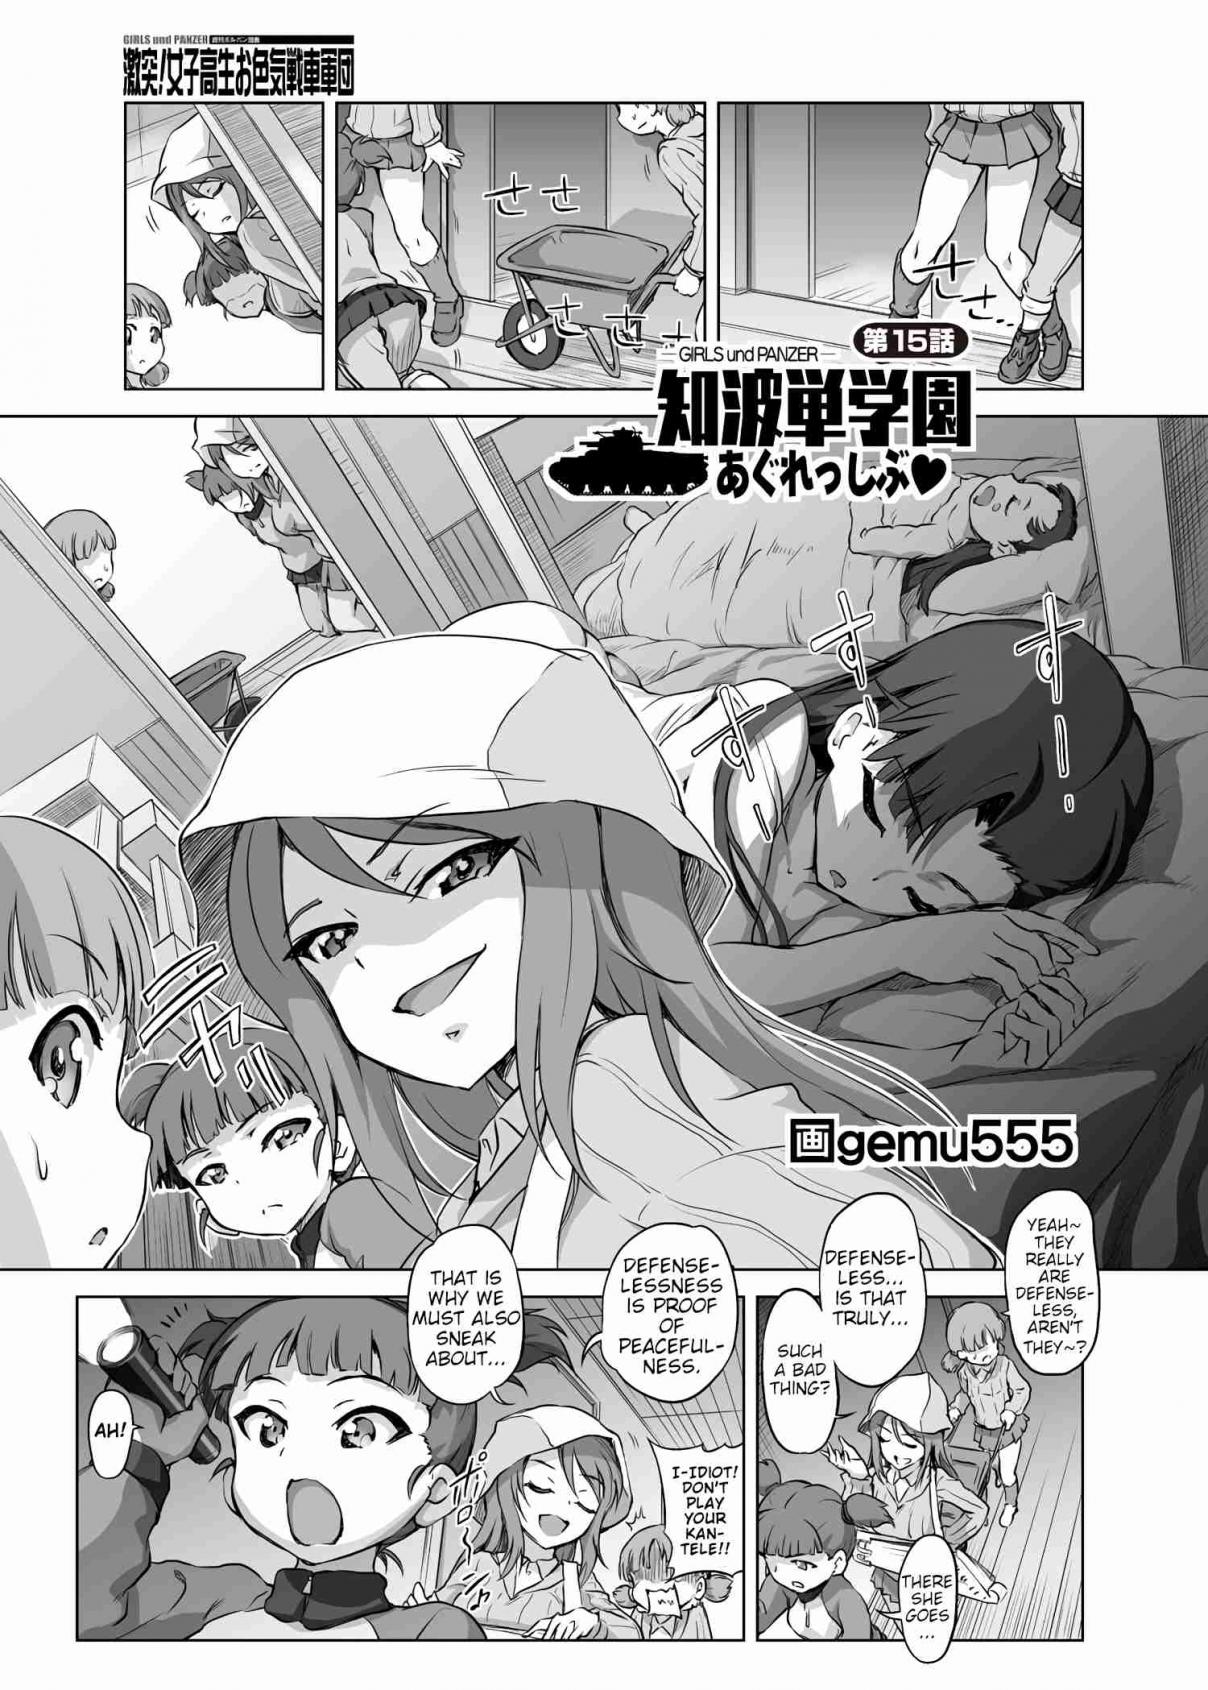 Girls und Panzer Chi HaTan Academy Aggressive (Doujinshi) Vol. 1 Ch. 15